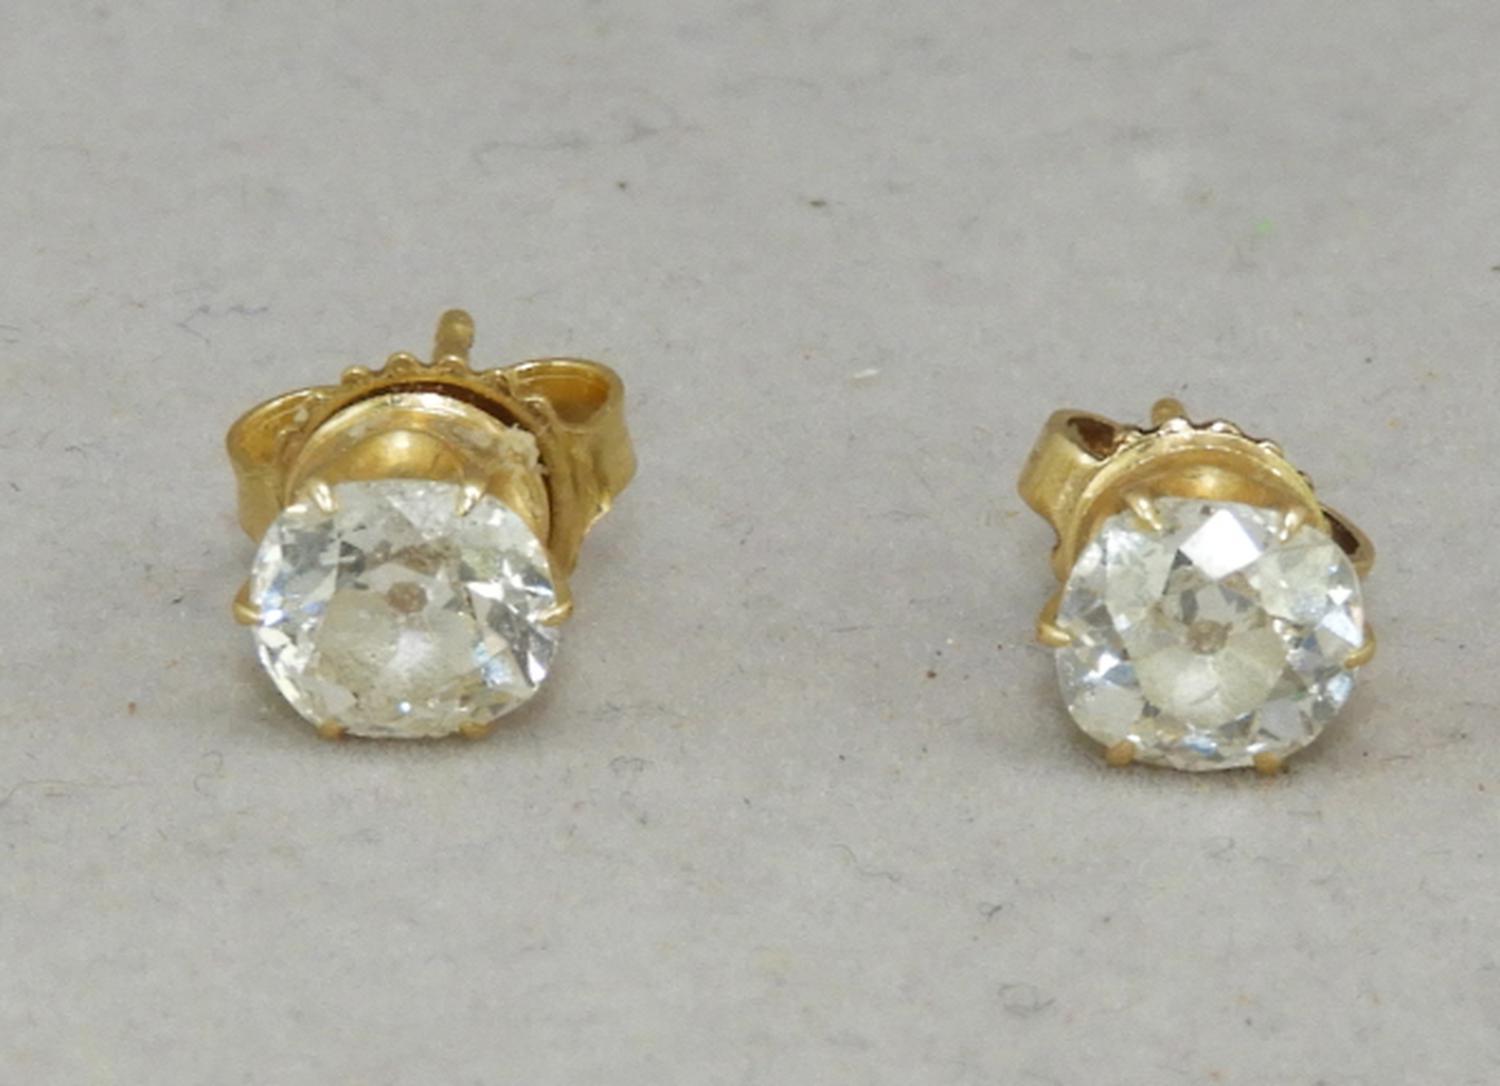 Murrays Auctioneers - Lot 54: Diamond stud earrings, 6 prong mount